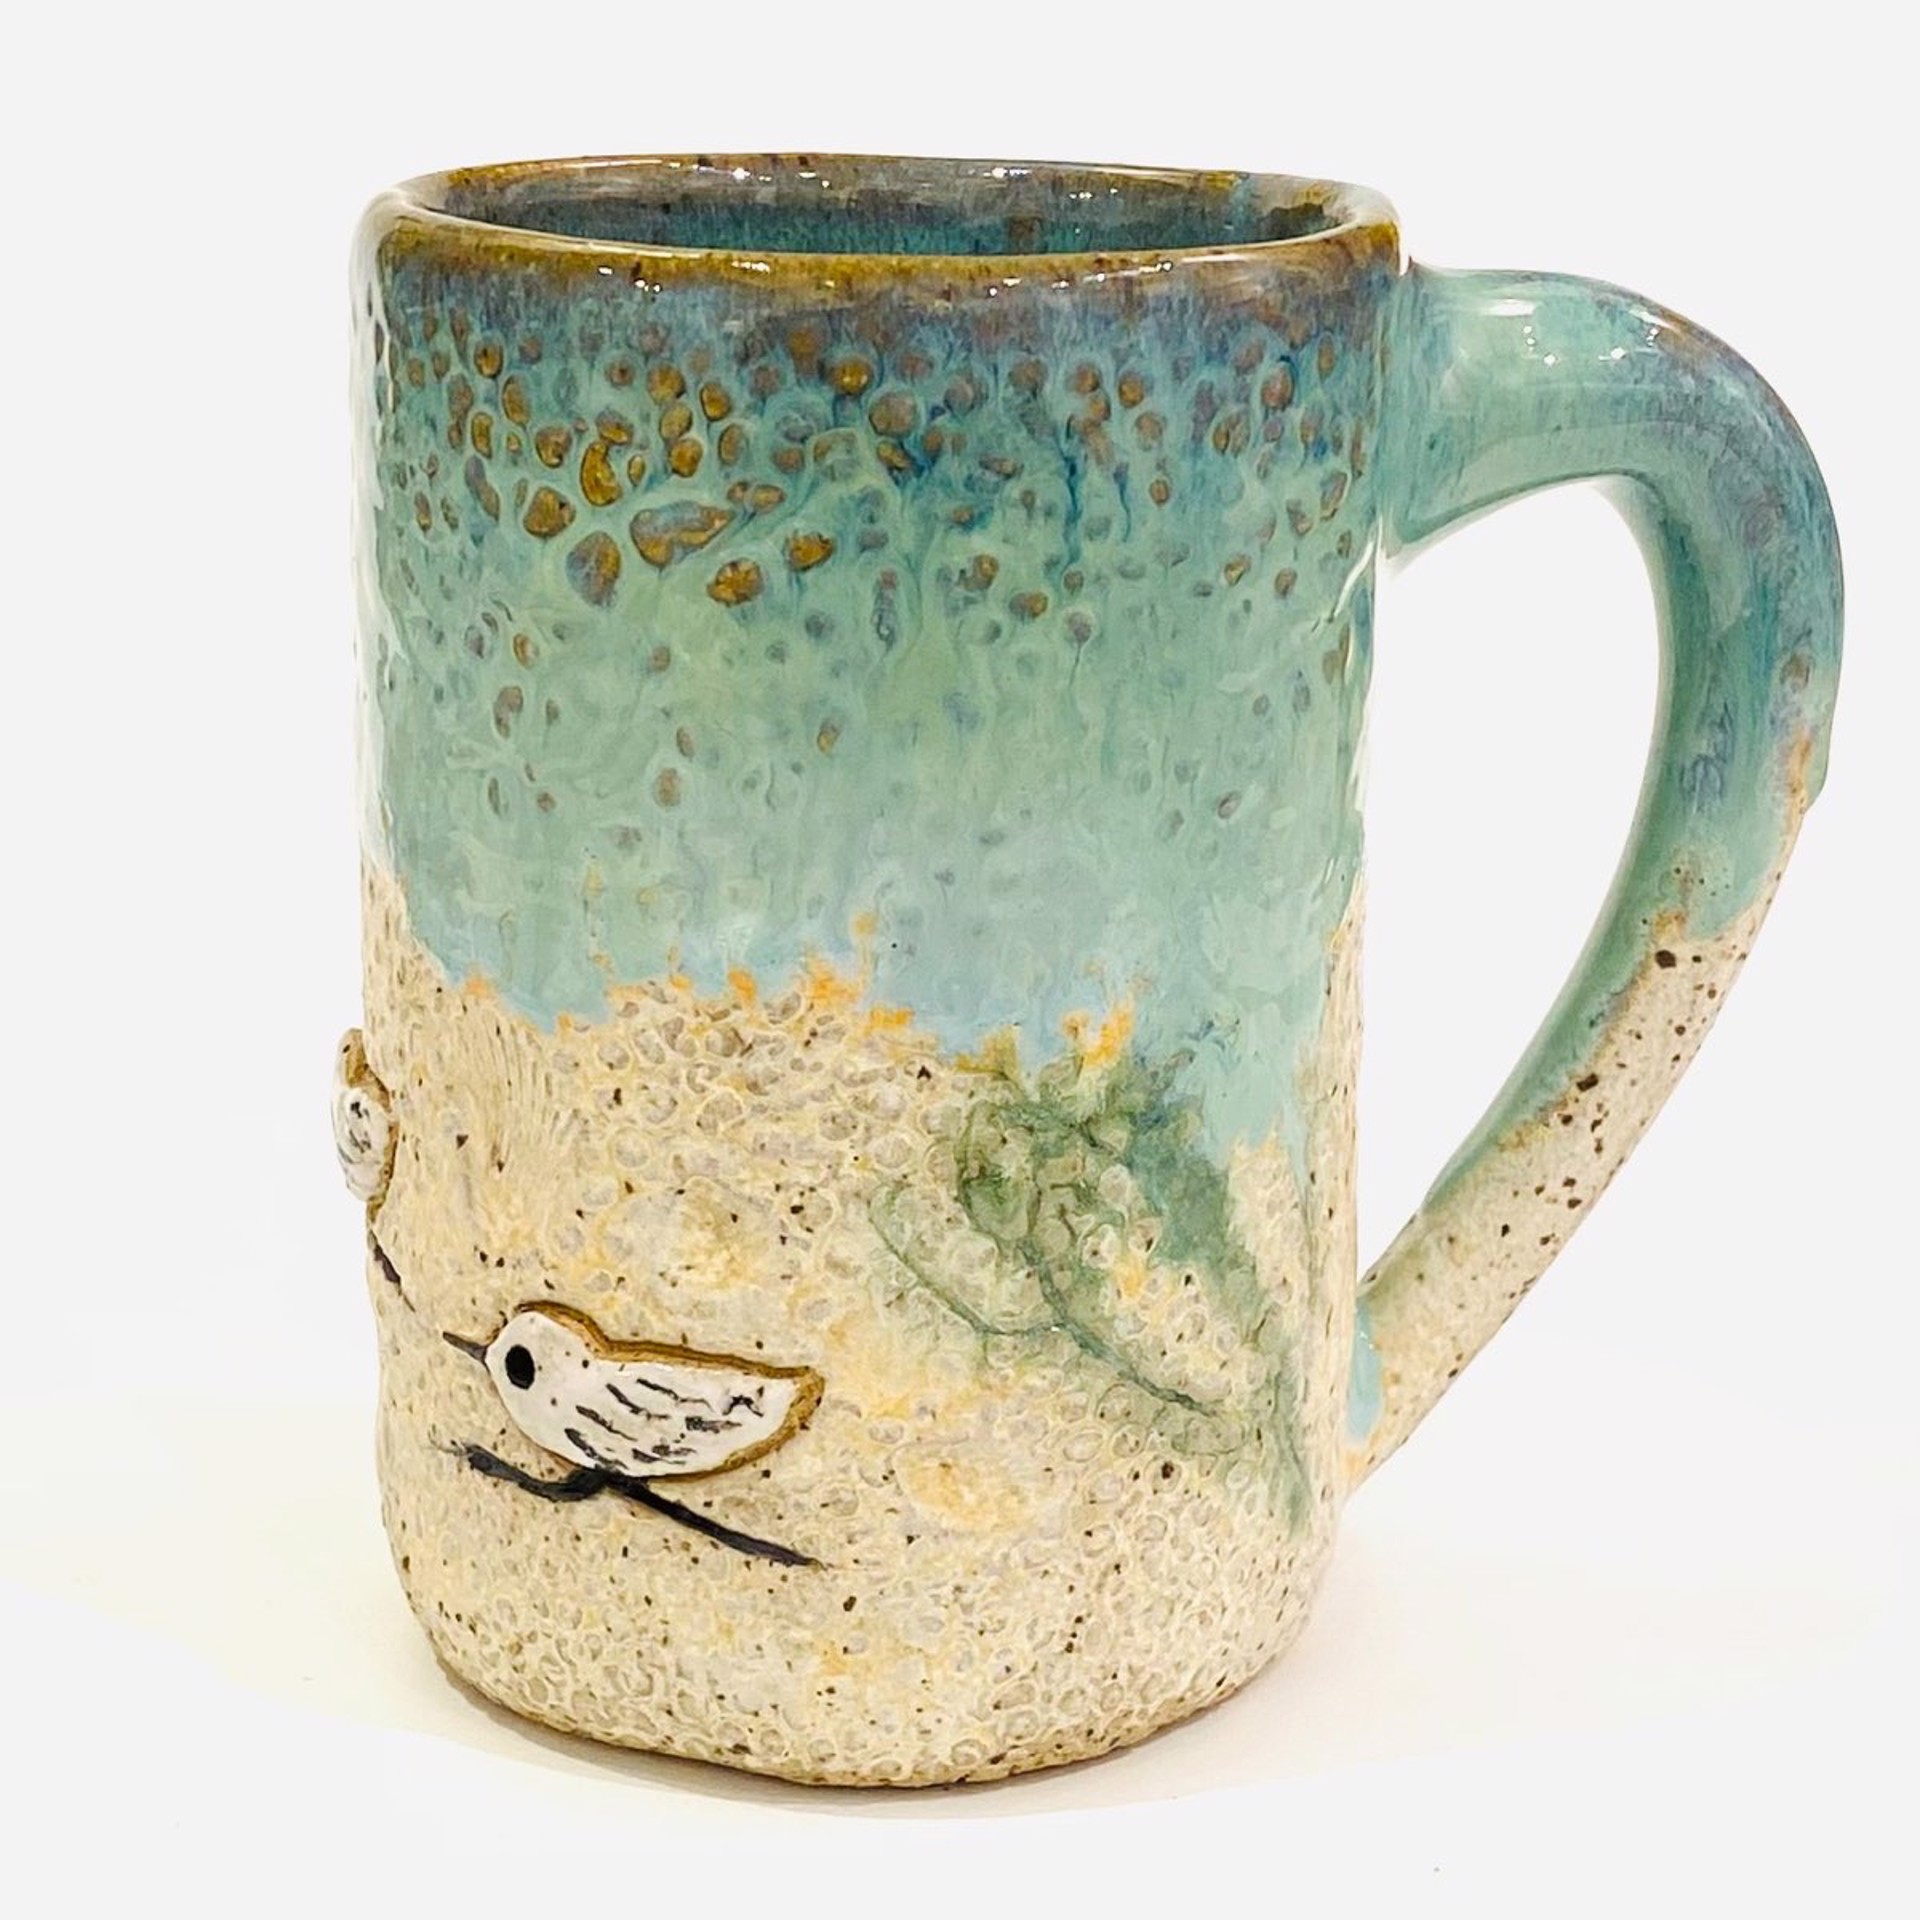 LG22-937 Mug with Sandpiper (Green Glaze) by Jim & Steffi Logan